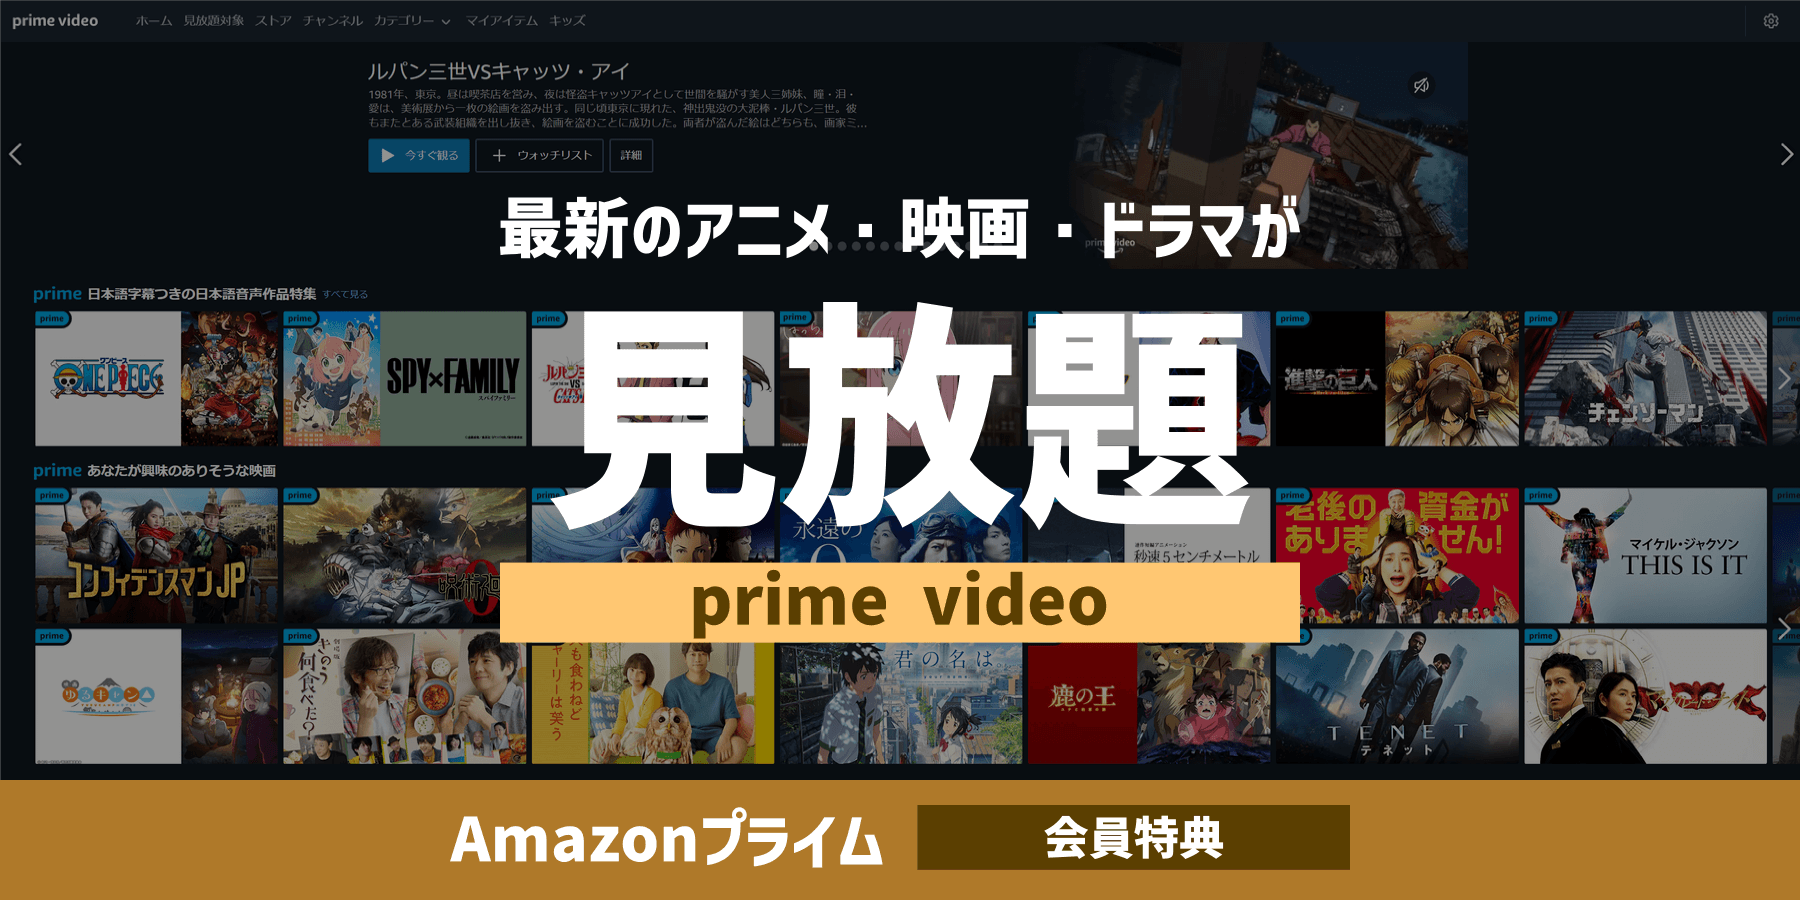 Amazon prime video 見放題サービス